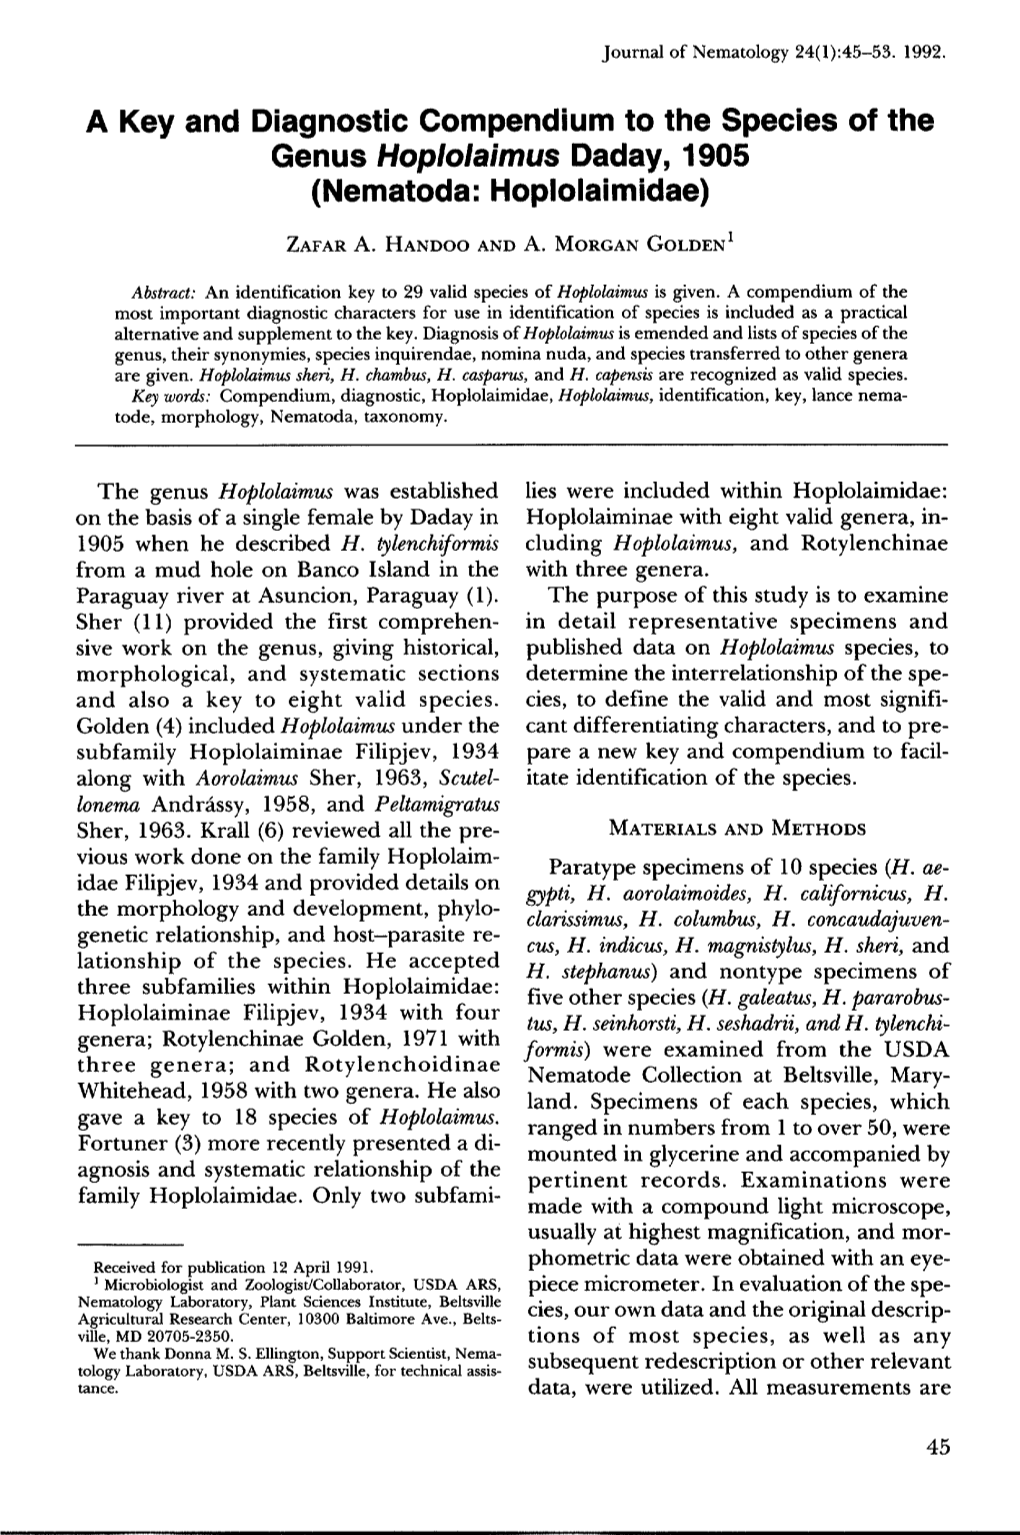 A Key and Diagnostic Compendium to the Species of the Genus Hoplolaimus Daday, 1905 (Nematoda: Hoplolaimidae)